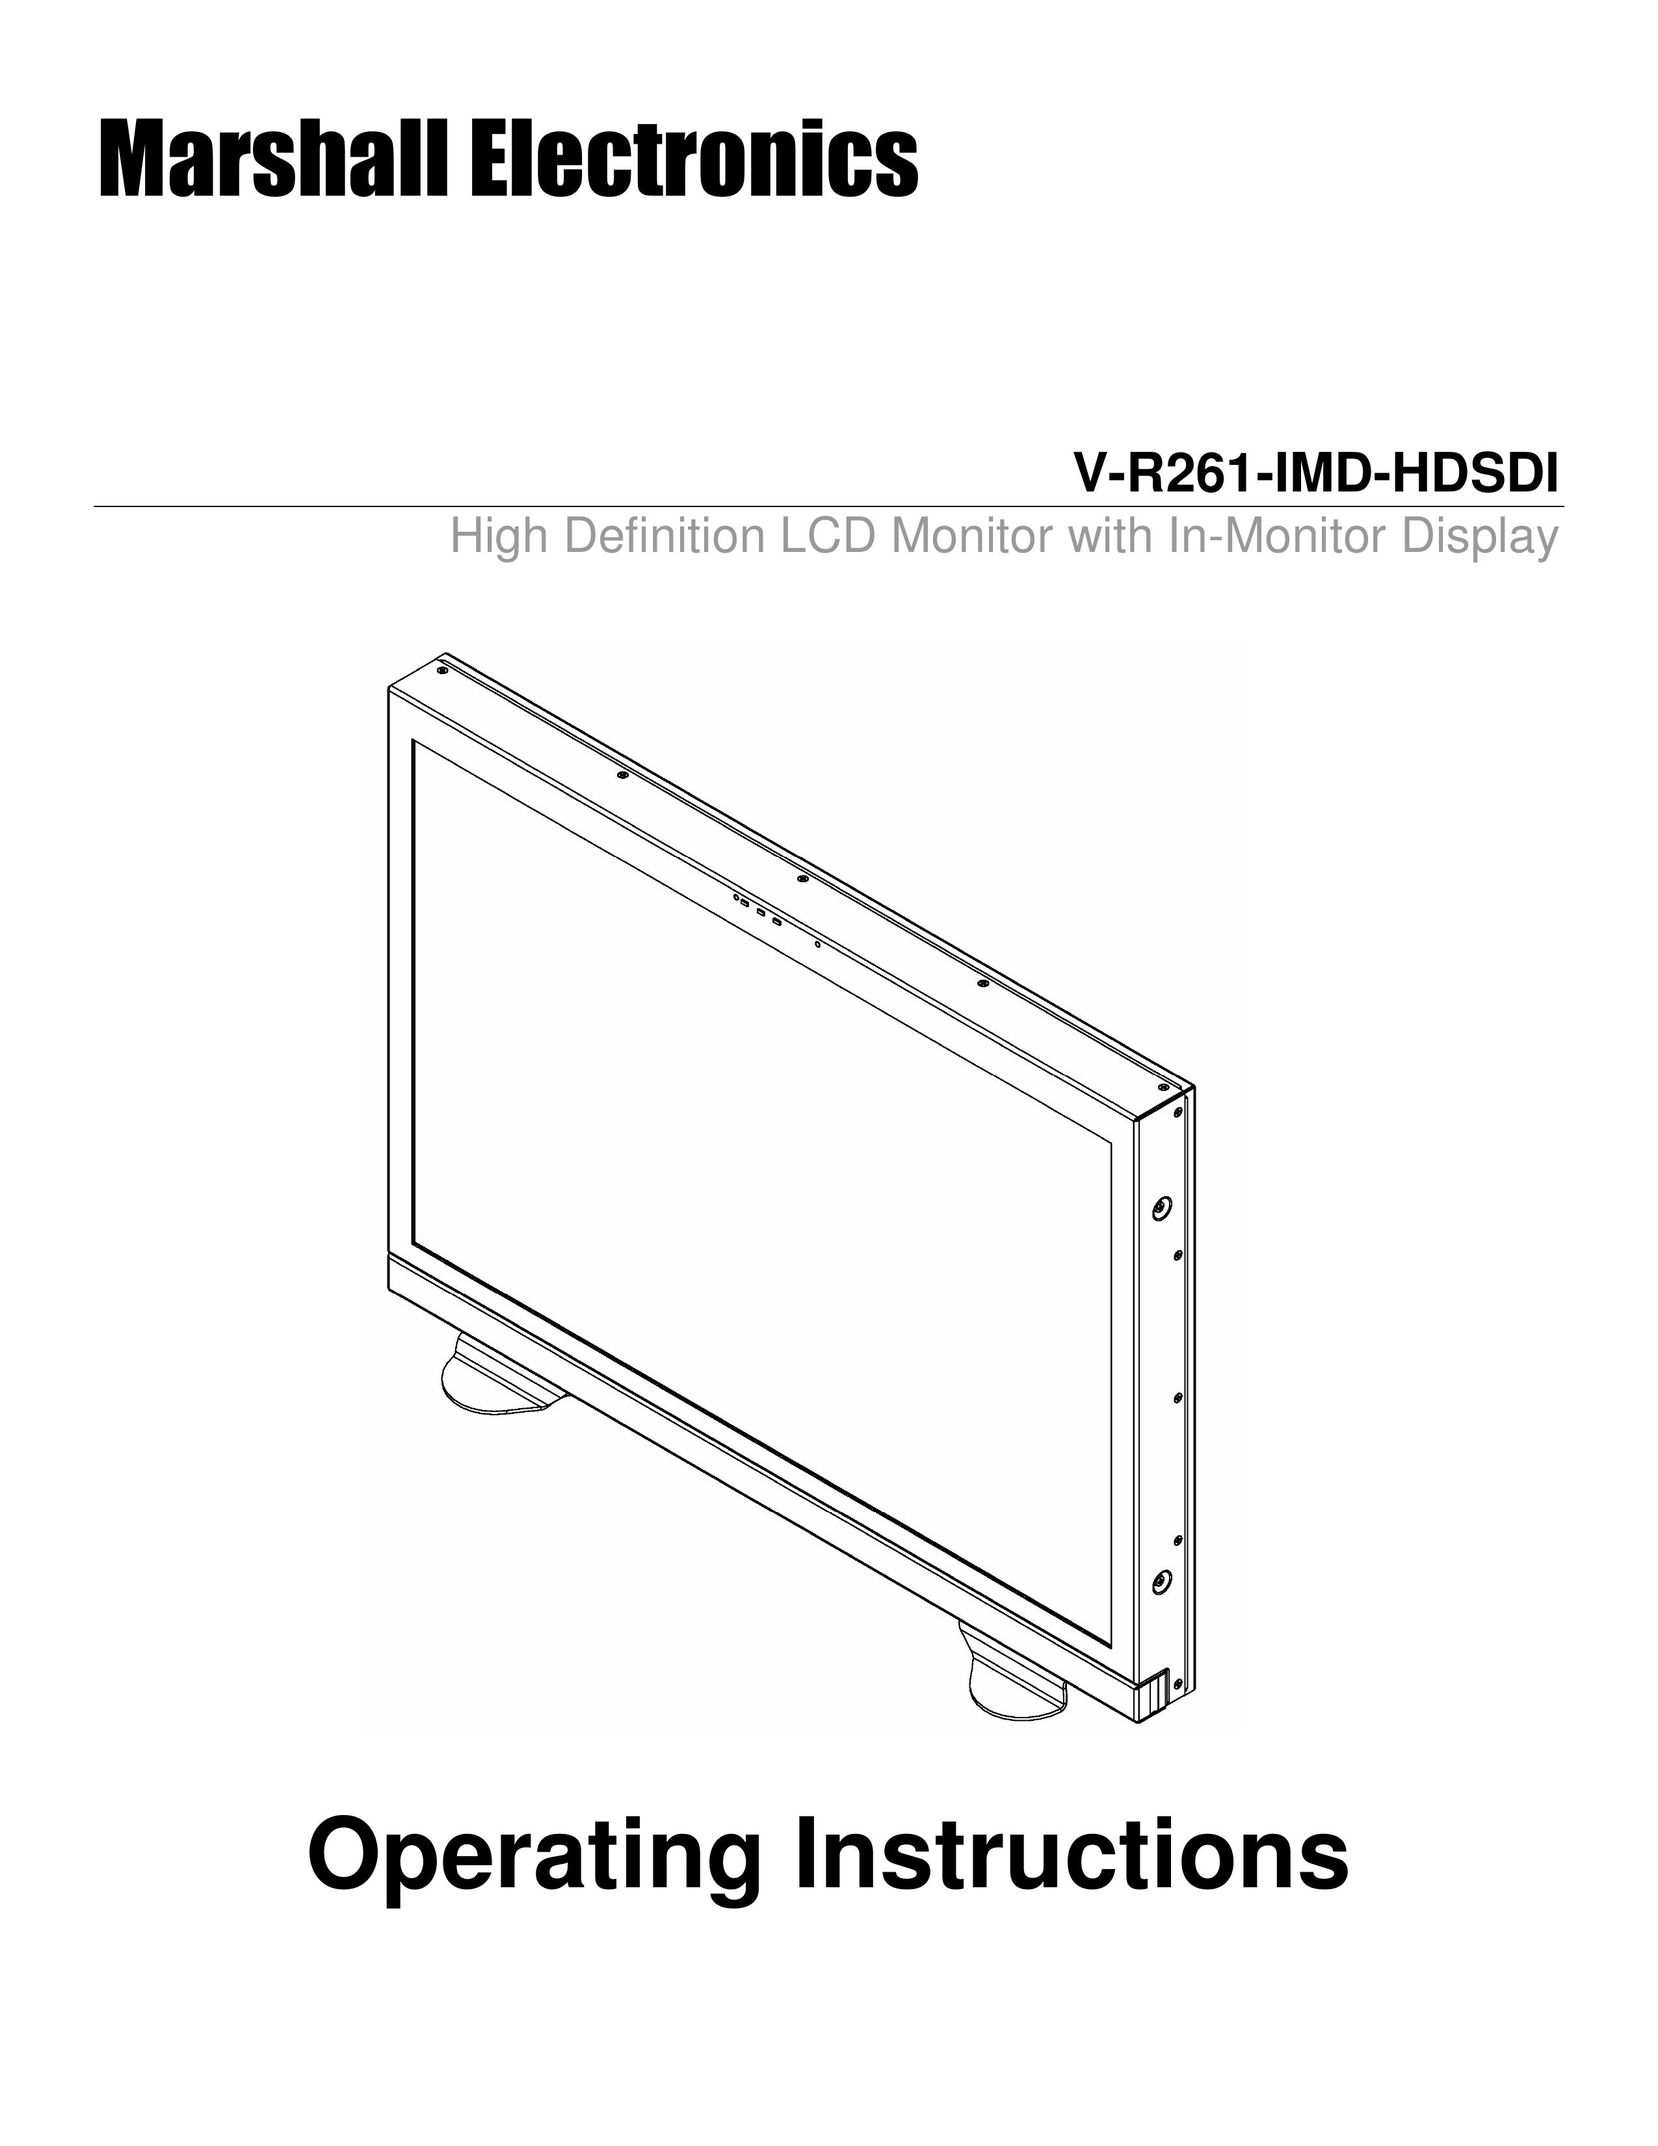 Marshall electronic V-R261-IMD-HDSDI Flat Panel Television User Manual